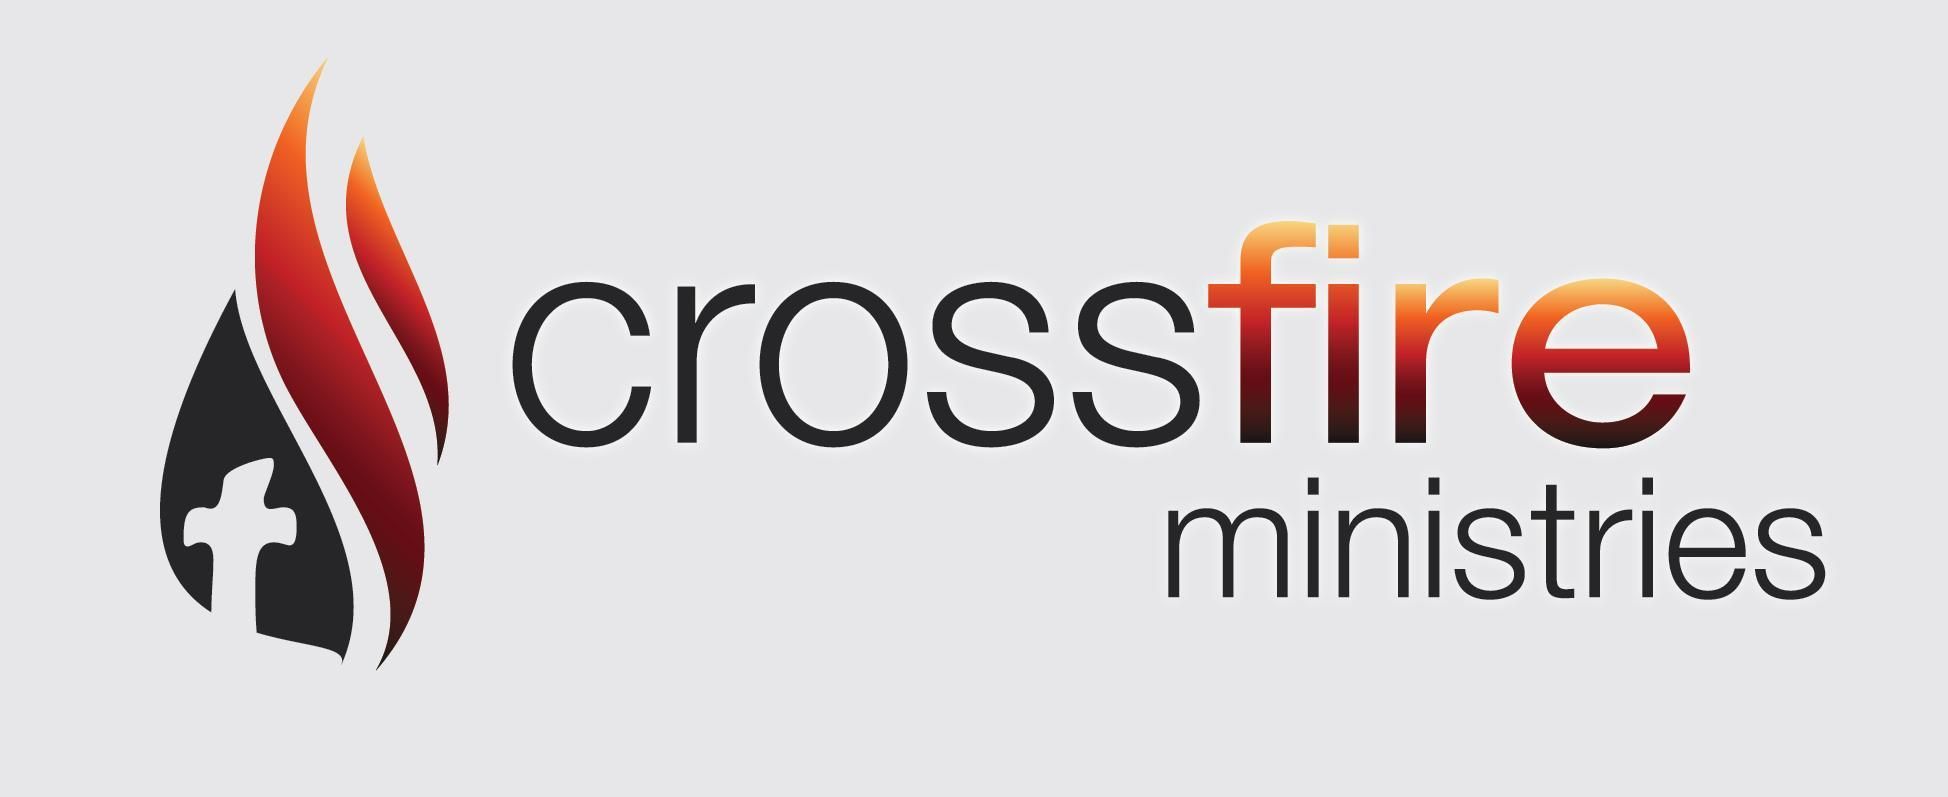 Crossfire Ministries Branding 01